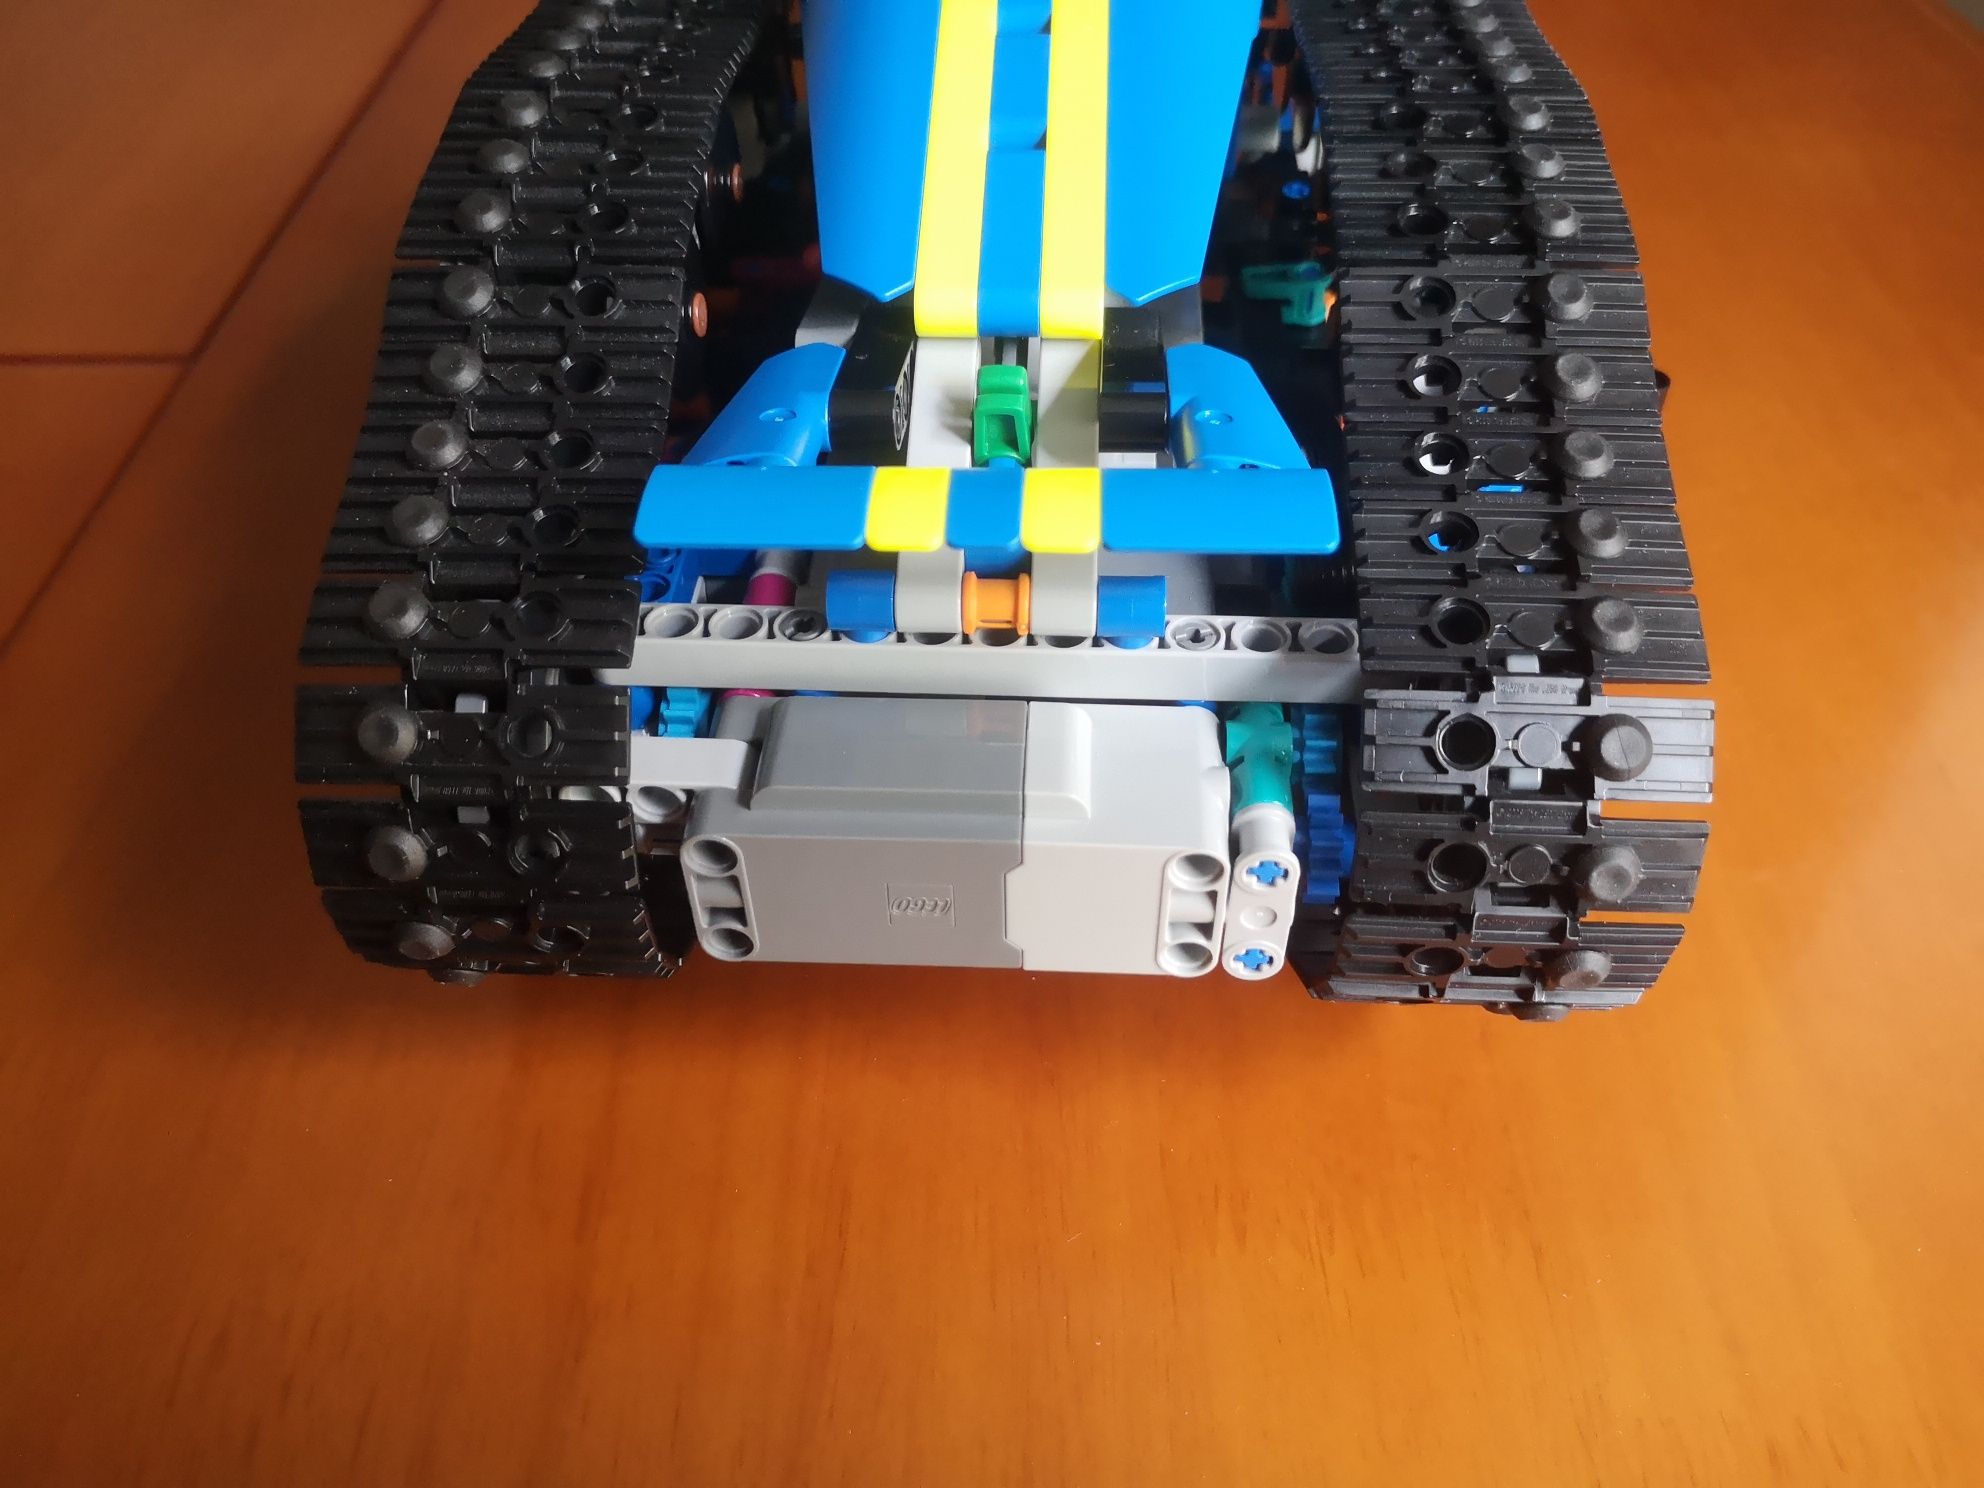 Lego Technic 42140